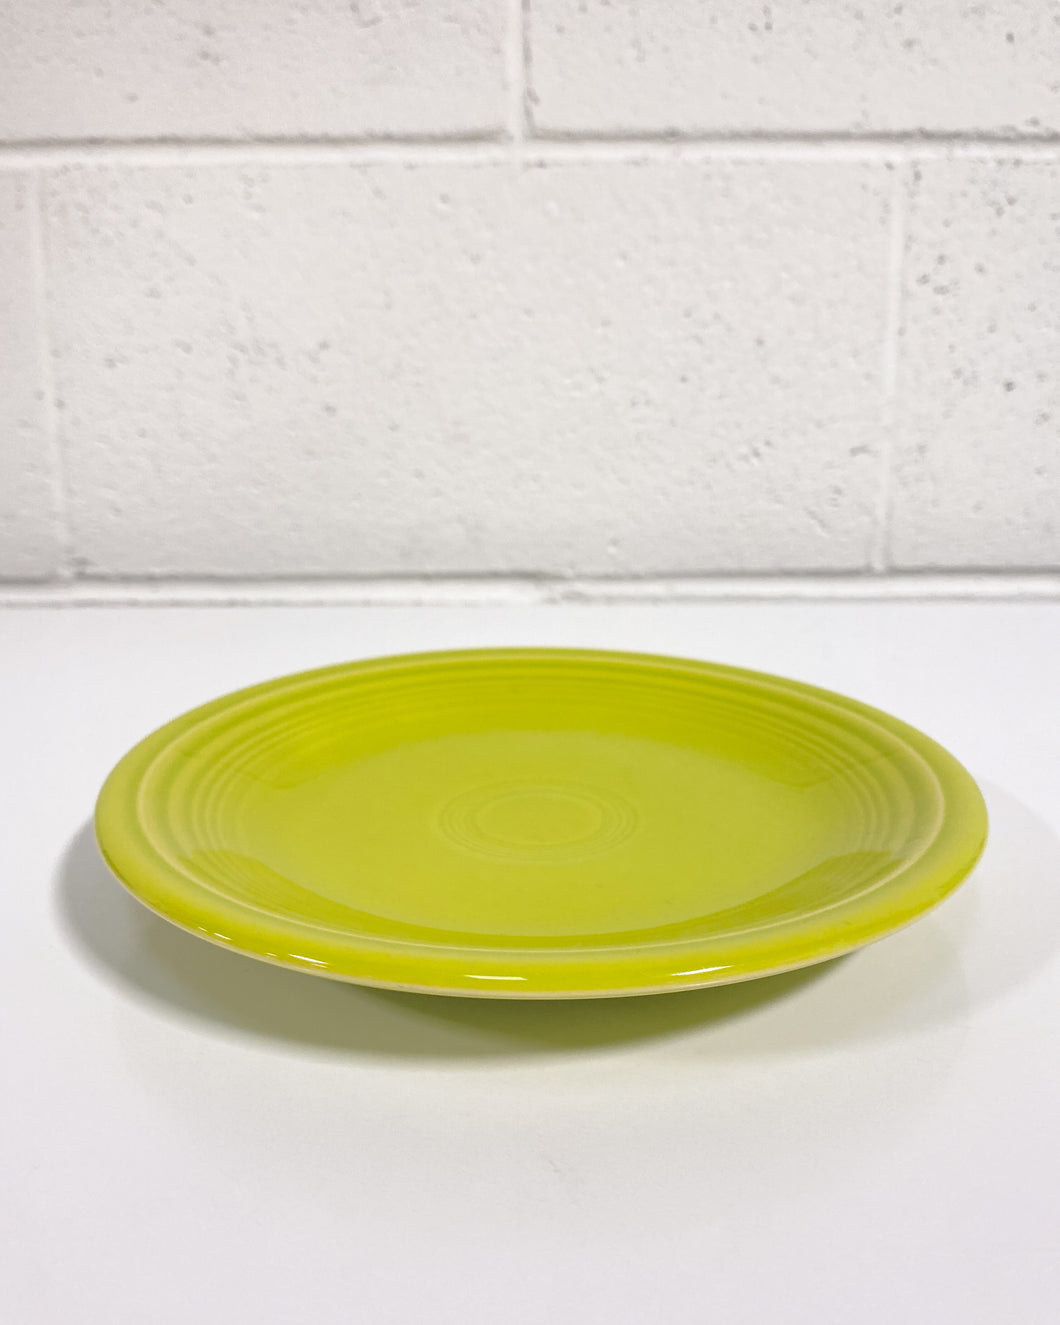 Small Chartreuse Fiesta Ware Plate